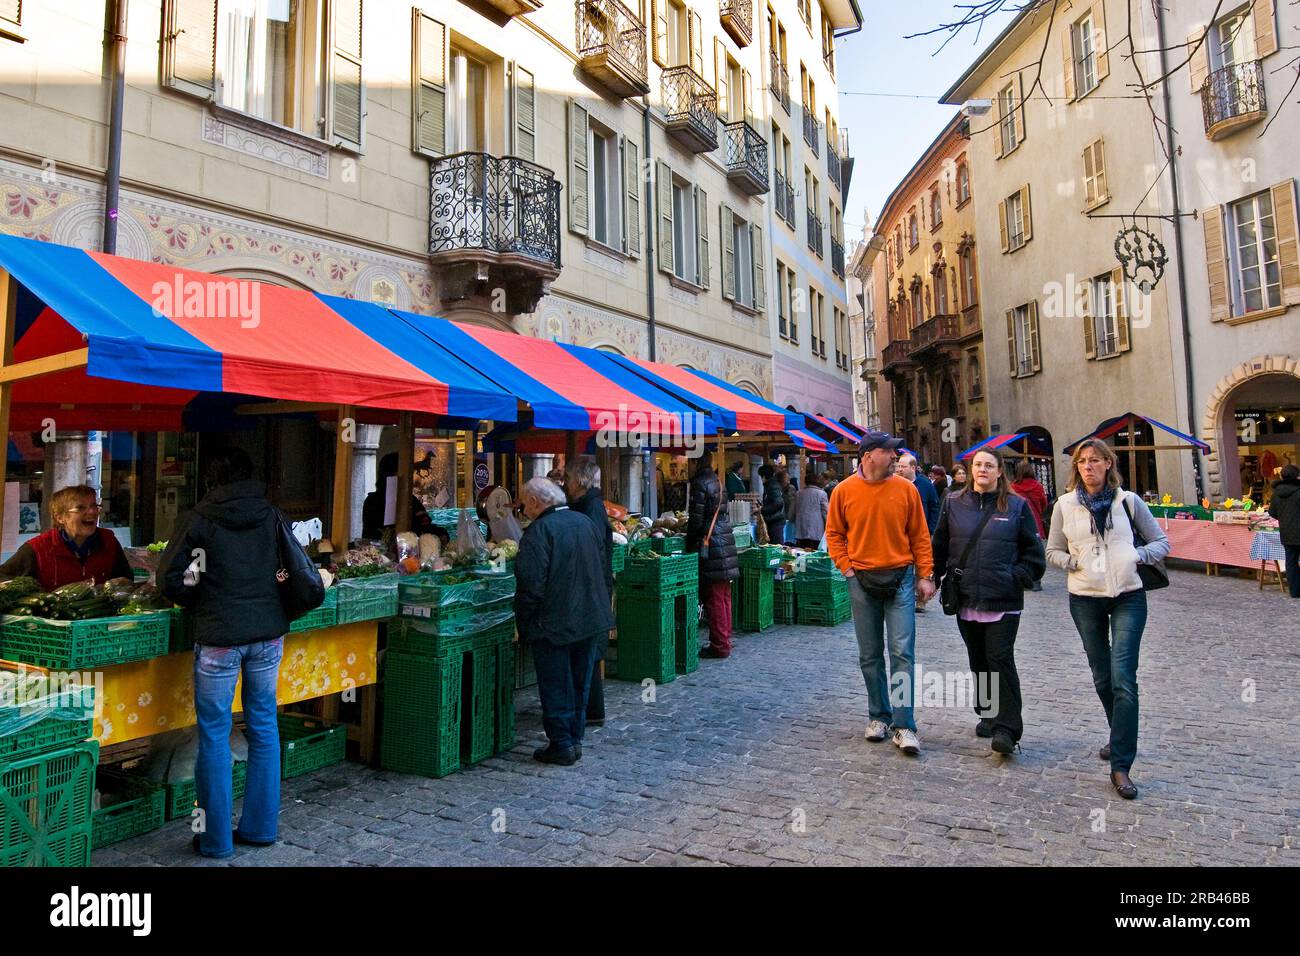 Market in town, Bellinzona, Canton Ticino, Switzerland Stock Photo